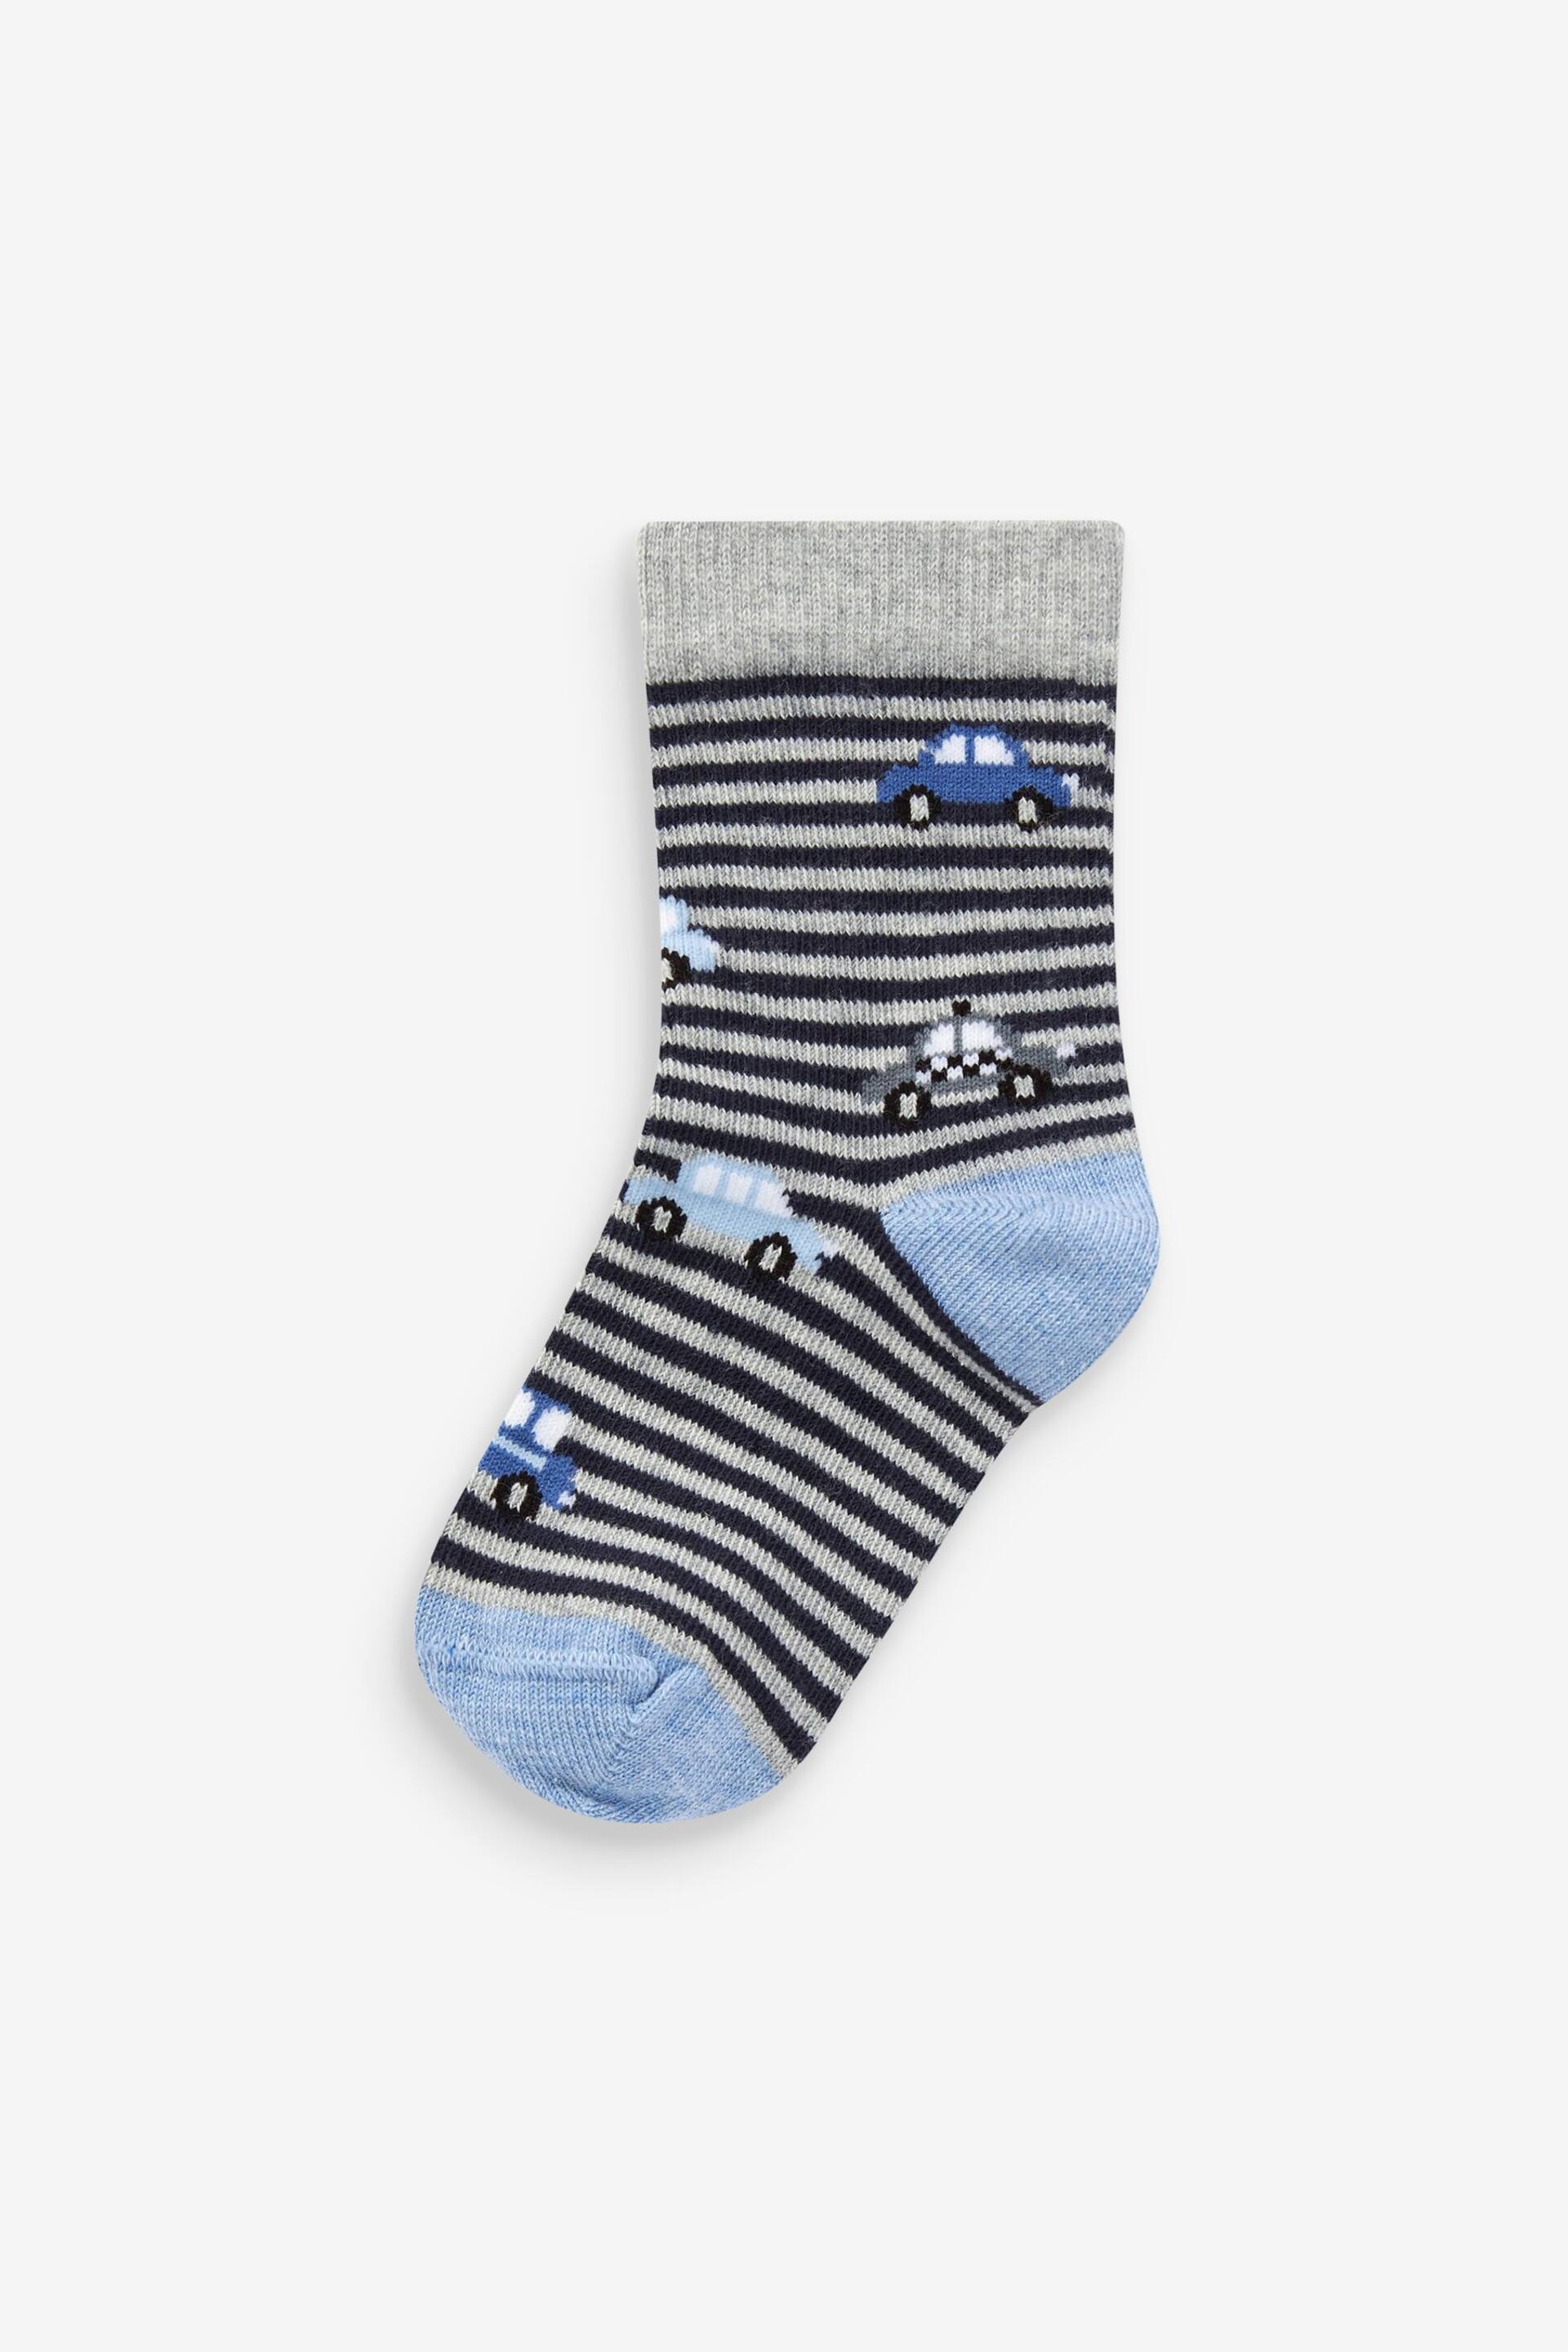 Blue Stripes/Transport Cotton Rich Socks 7 Pack - Image 8 of 8